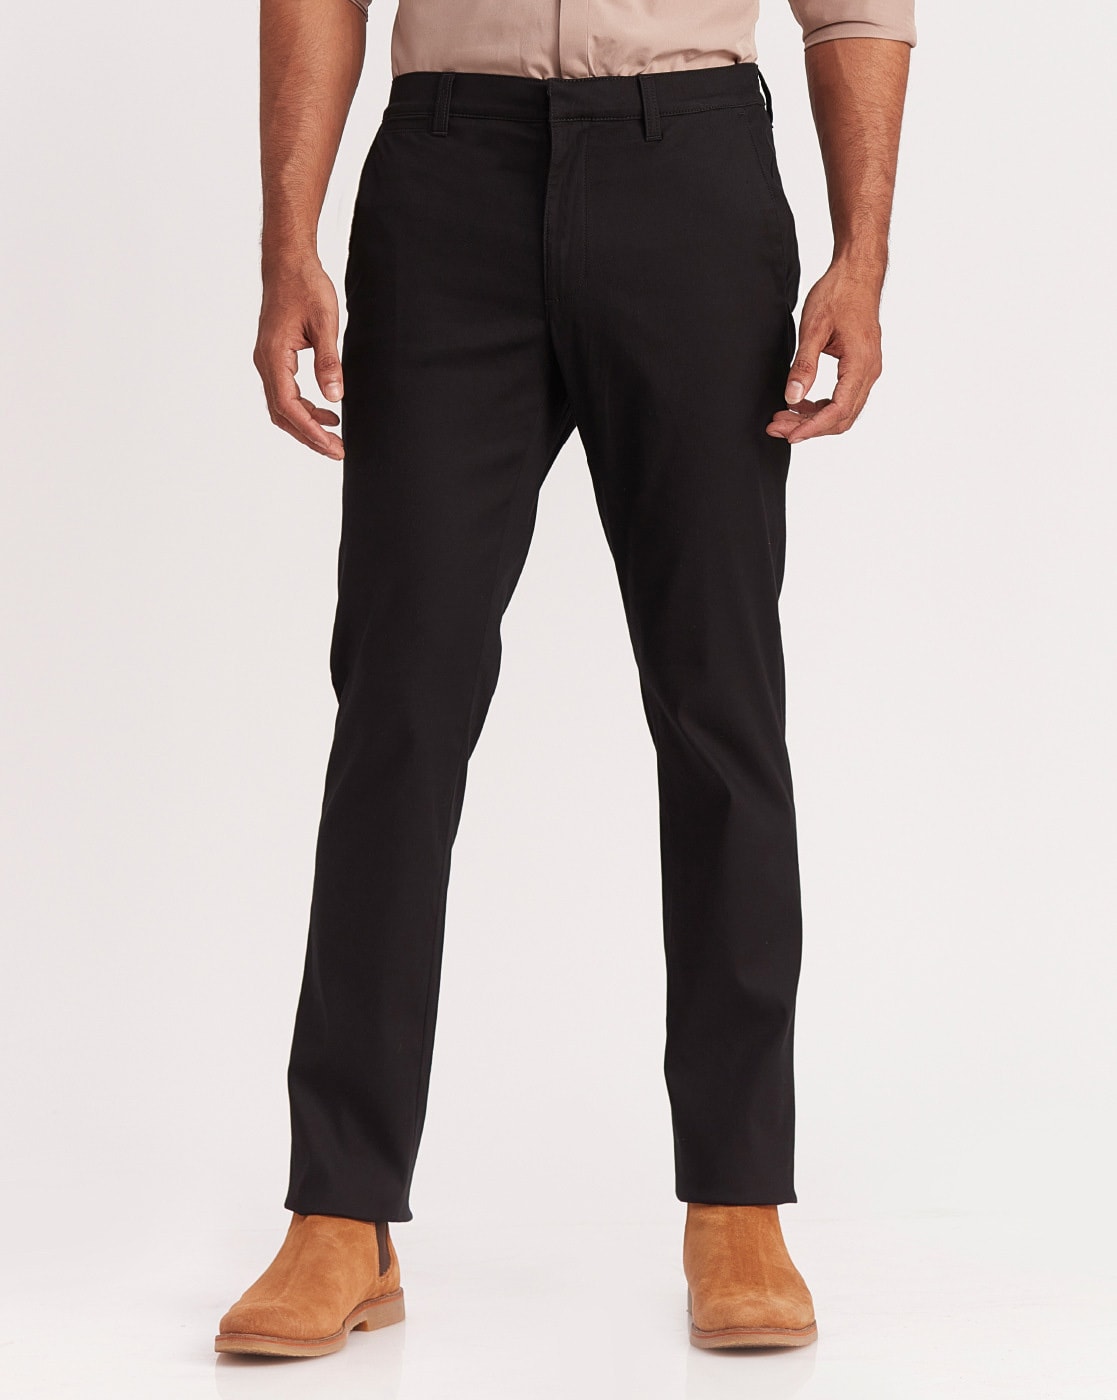 Relaxed Fit Pants - Black - Men | H&M US